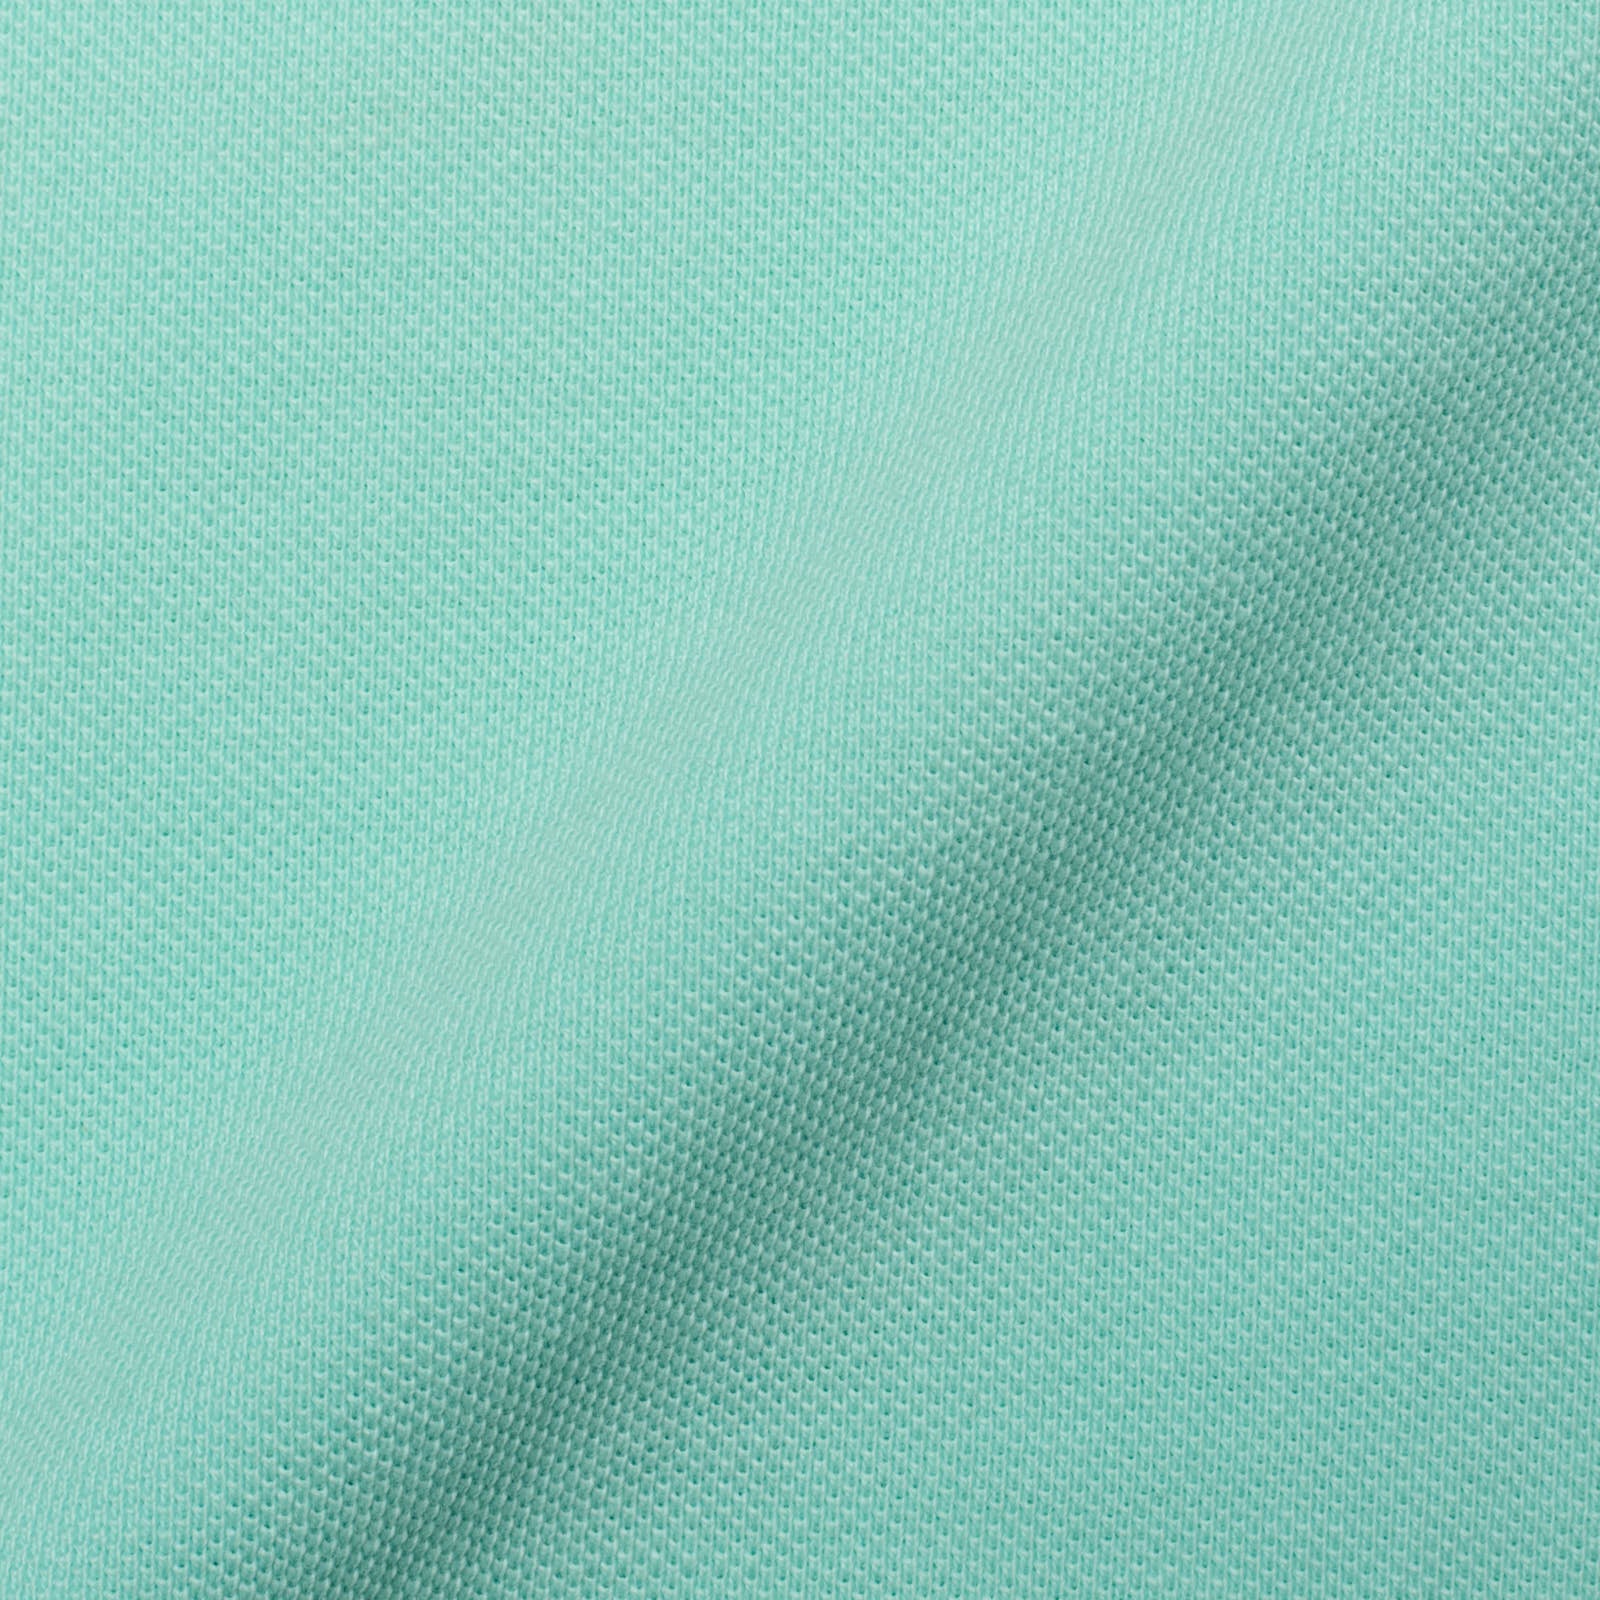 BORGONERO Luxury Brand Mint Green Cotton Polo Shirt NEW S